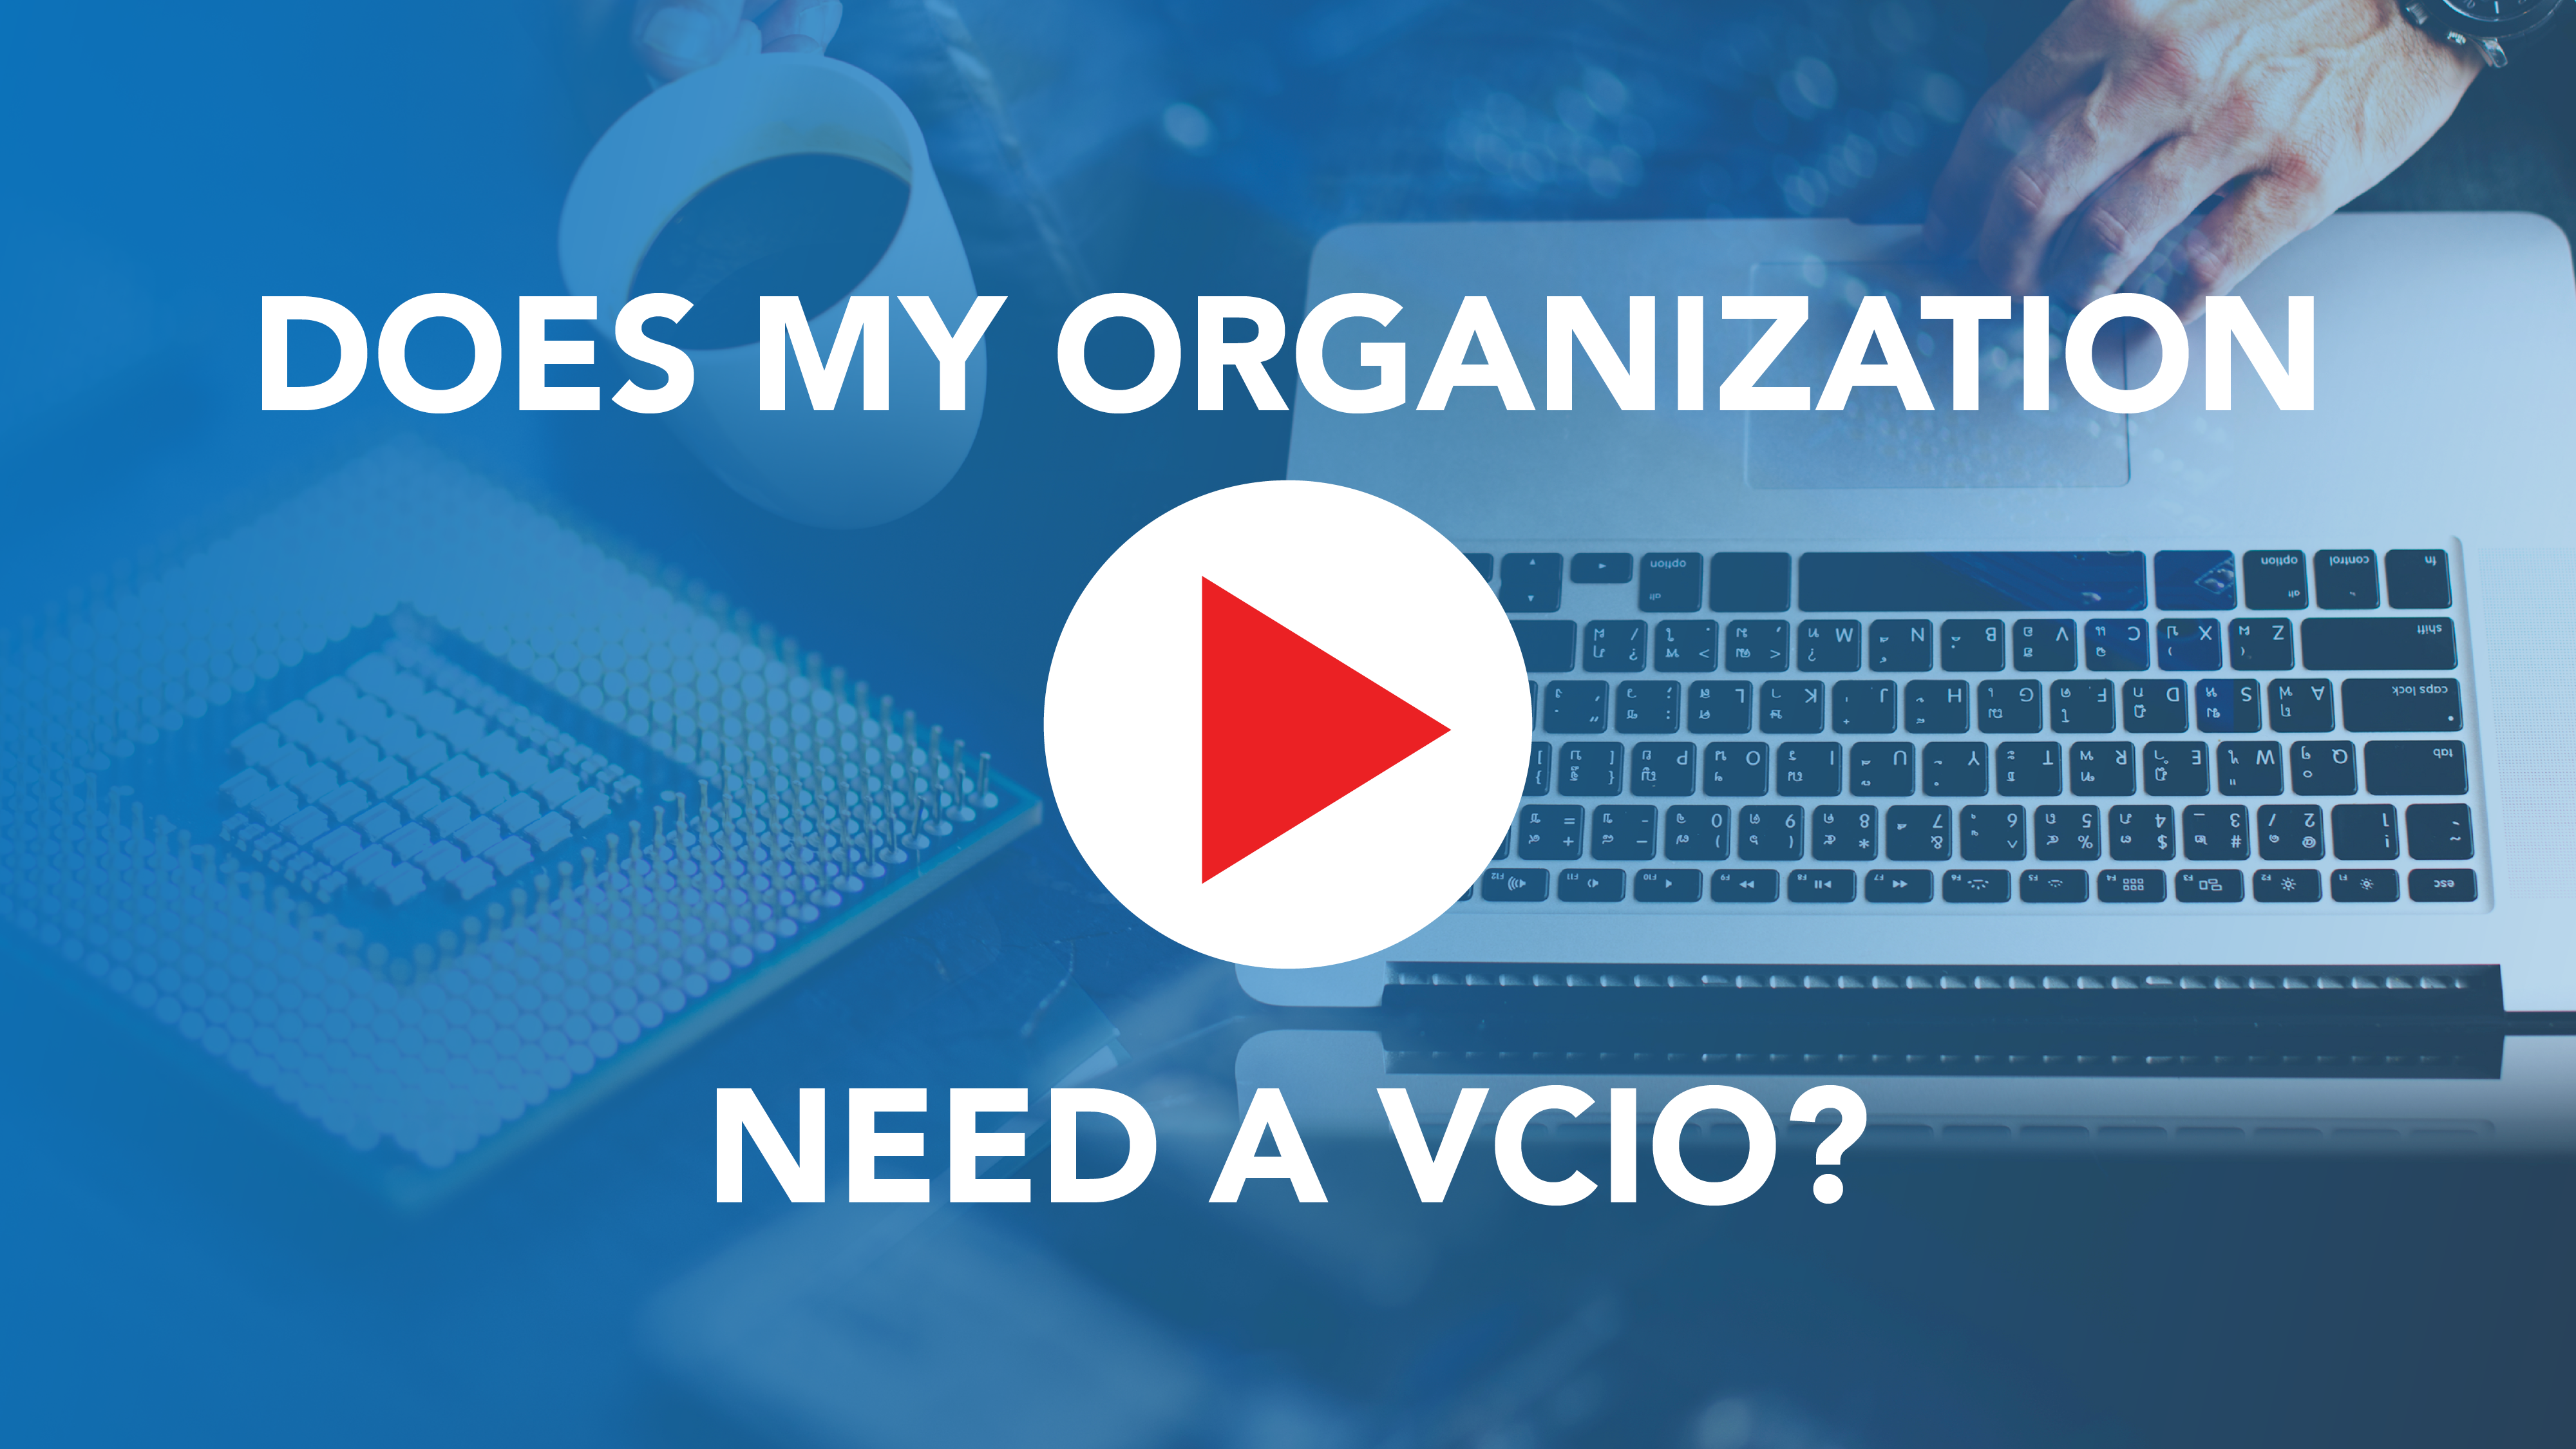 Does my organization need a vCIO?